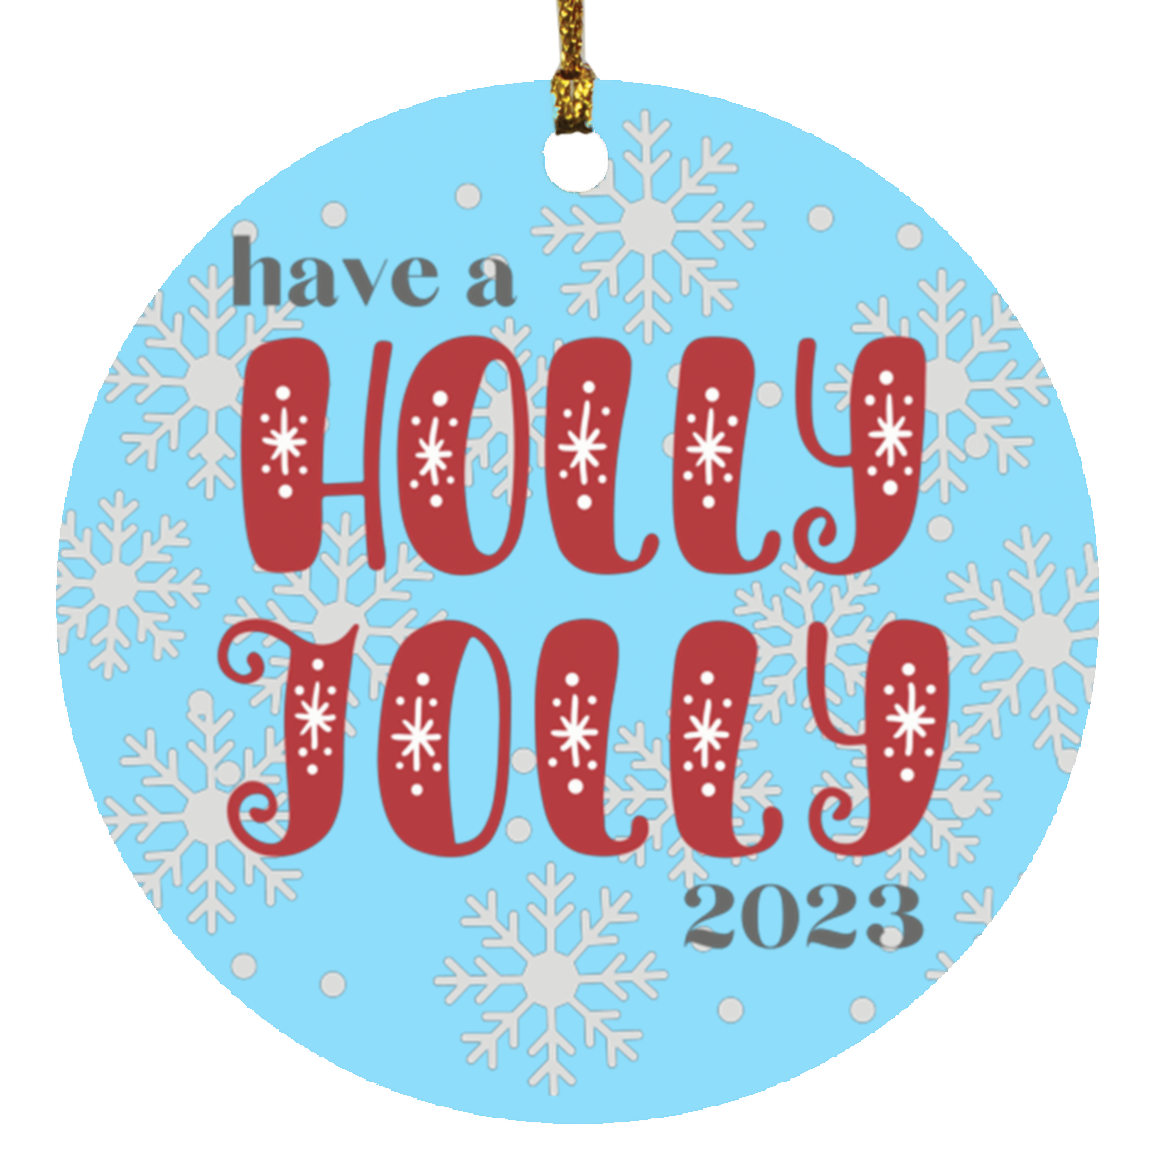 Holly Jolly 2023 Circle Ornament